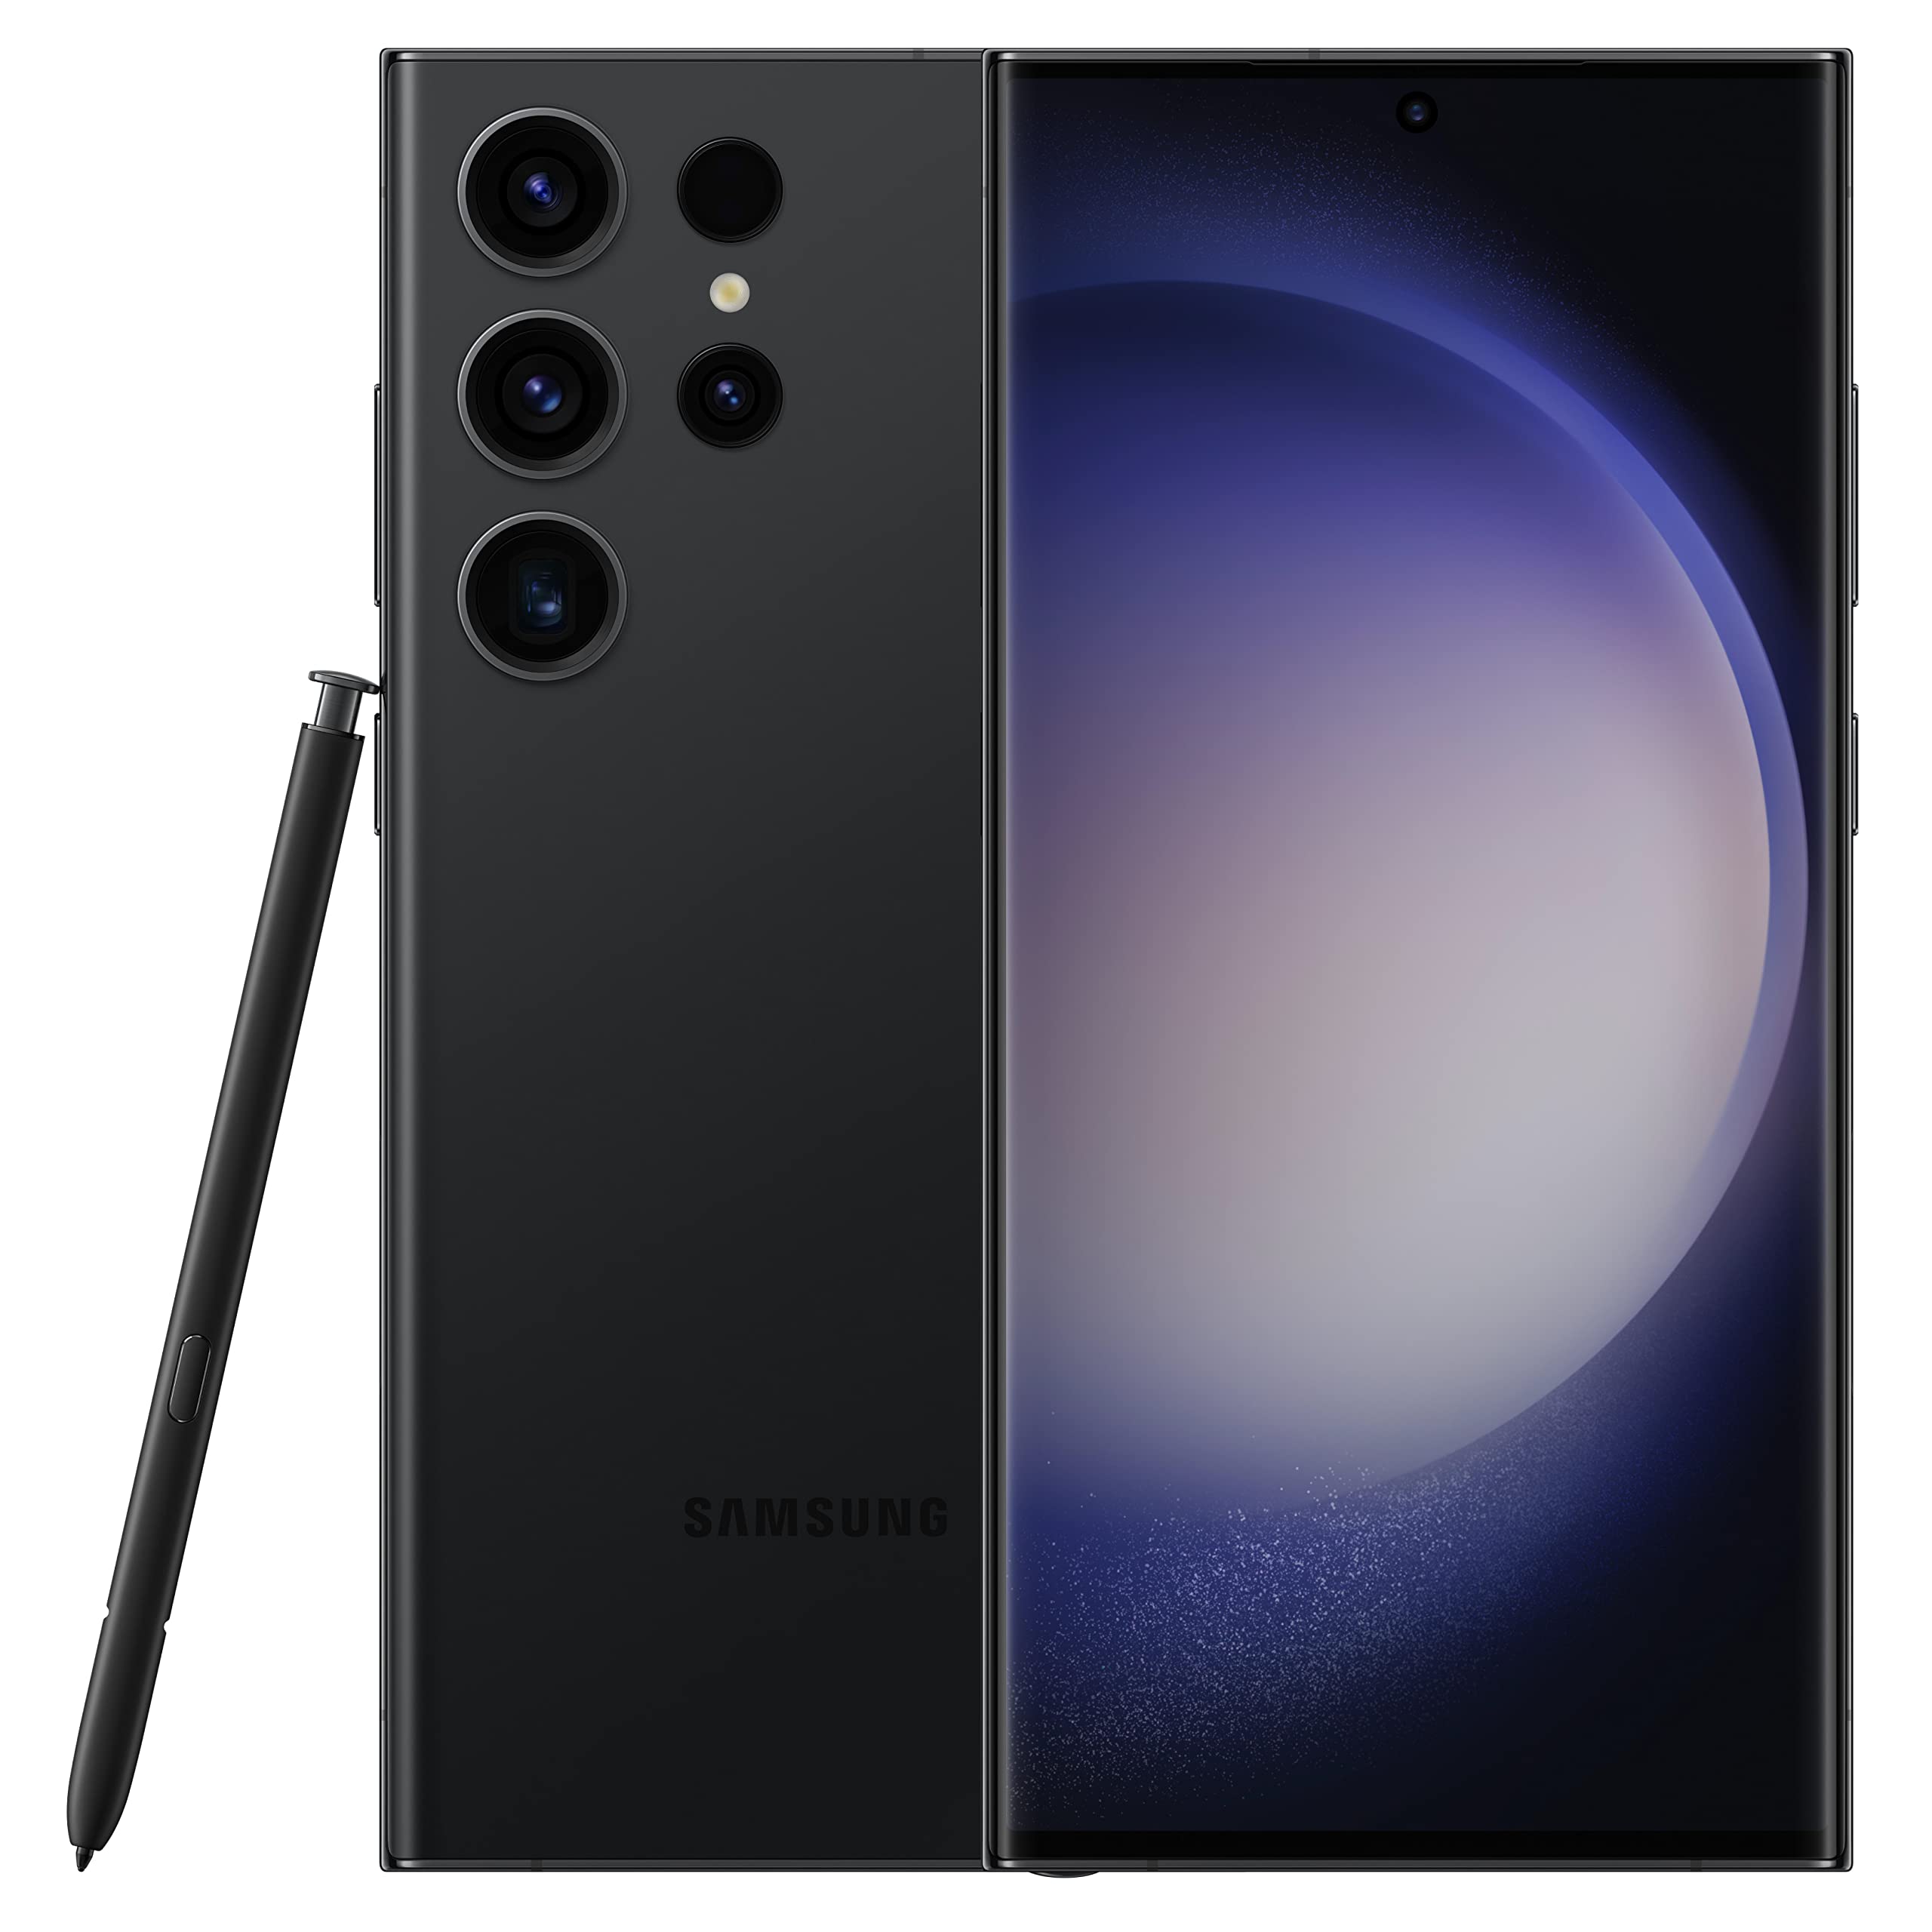 Samsung Galaxy S23 Ultra Cell Phone + $100 Amazon Gift Card Bundle, Factory Unlocked Android Smartphone, 512GB Storage, 200MP Camera, Night Mode, S Pen, US Version, 2023, Phantom Black